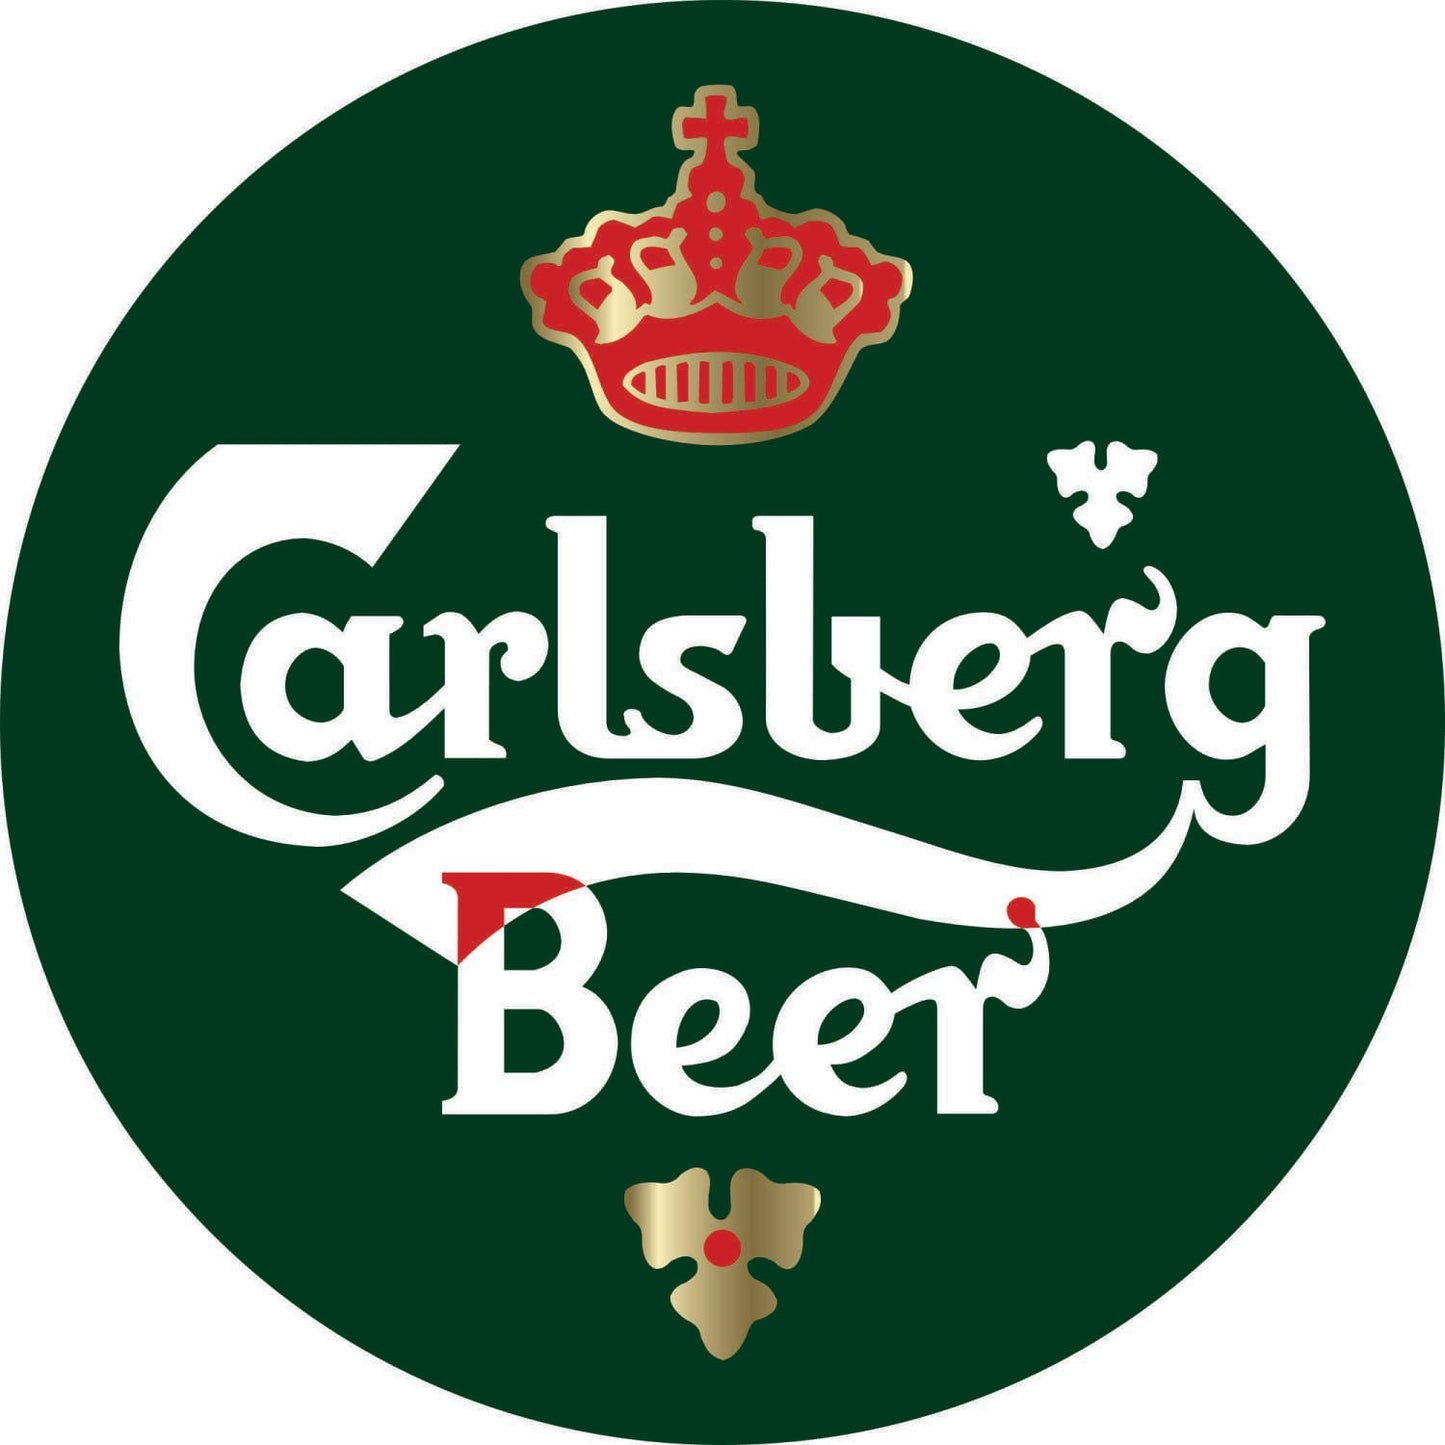 003-Single-sided illuminated sign - Carlsberg